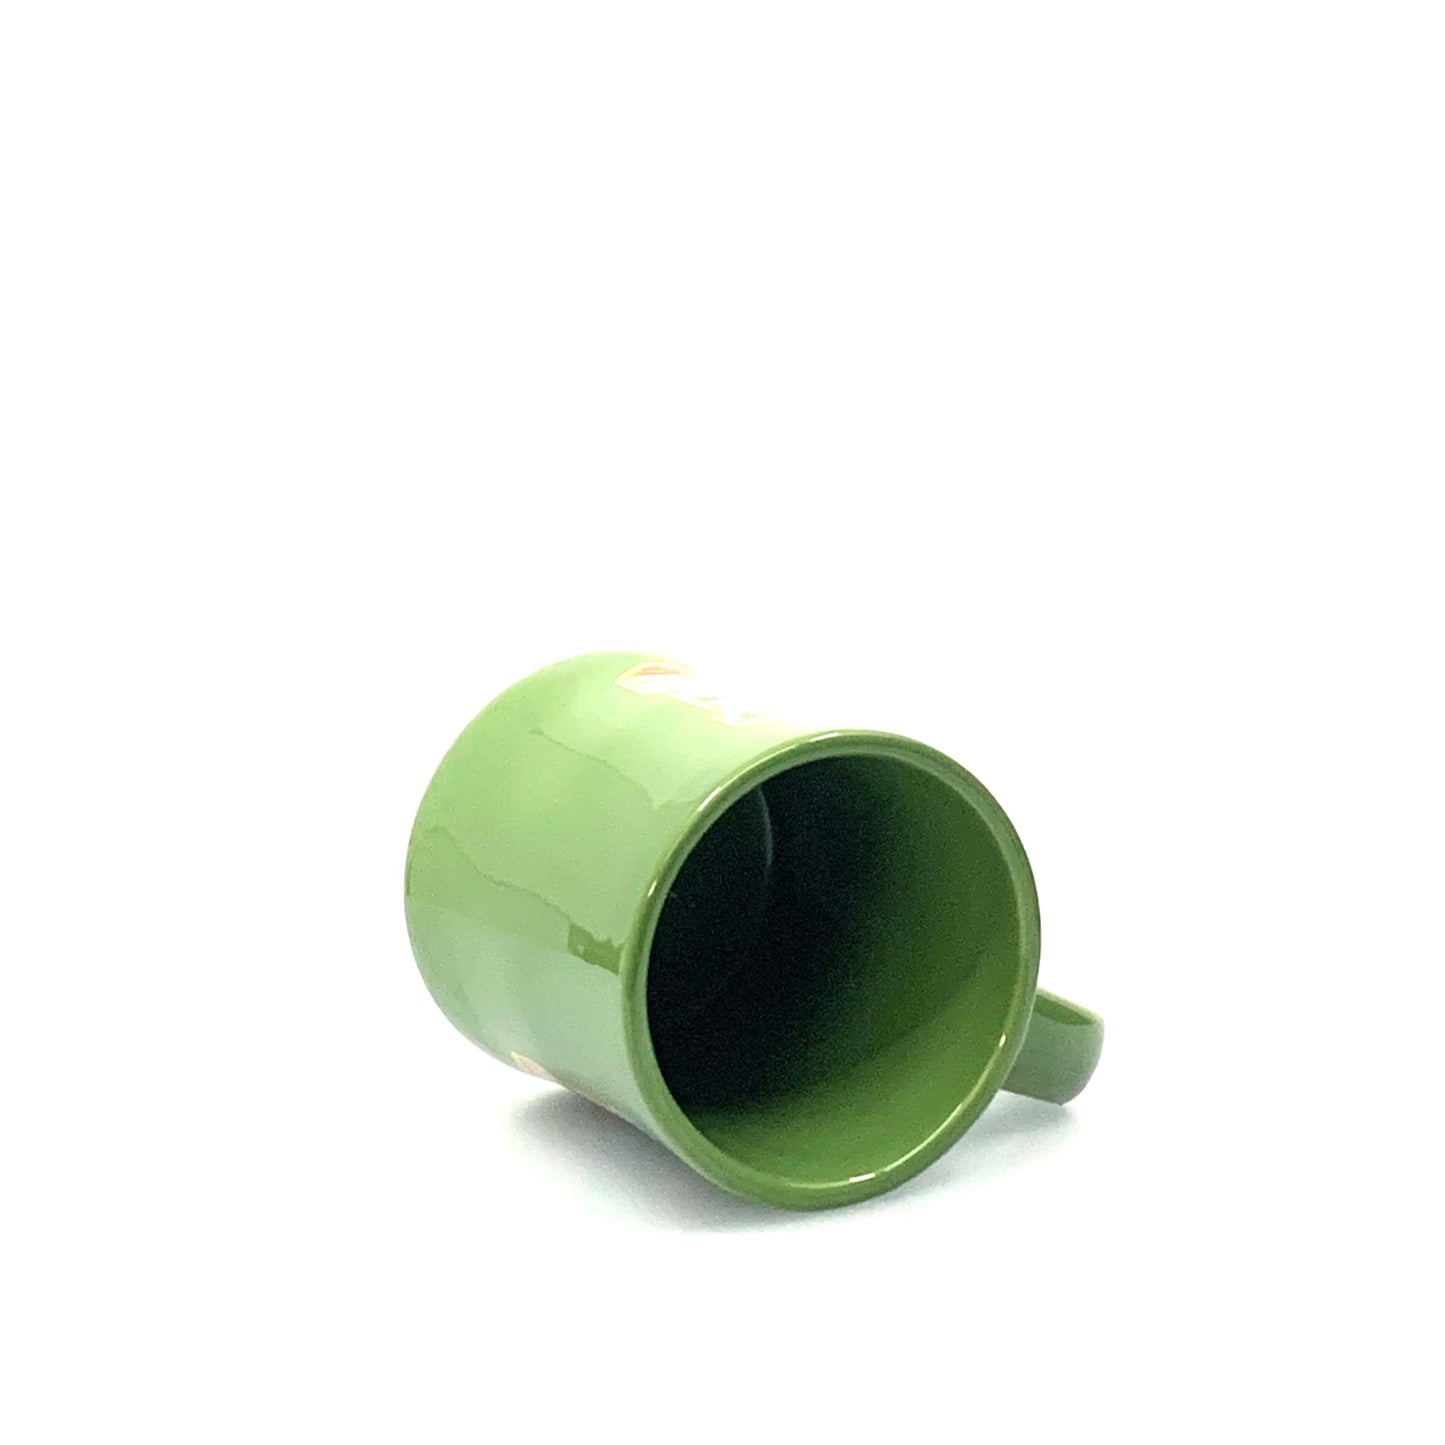 John Deere Licensed “We Sell The Plows” Coffee Cup Mug Green 10 Fl Oz